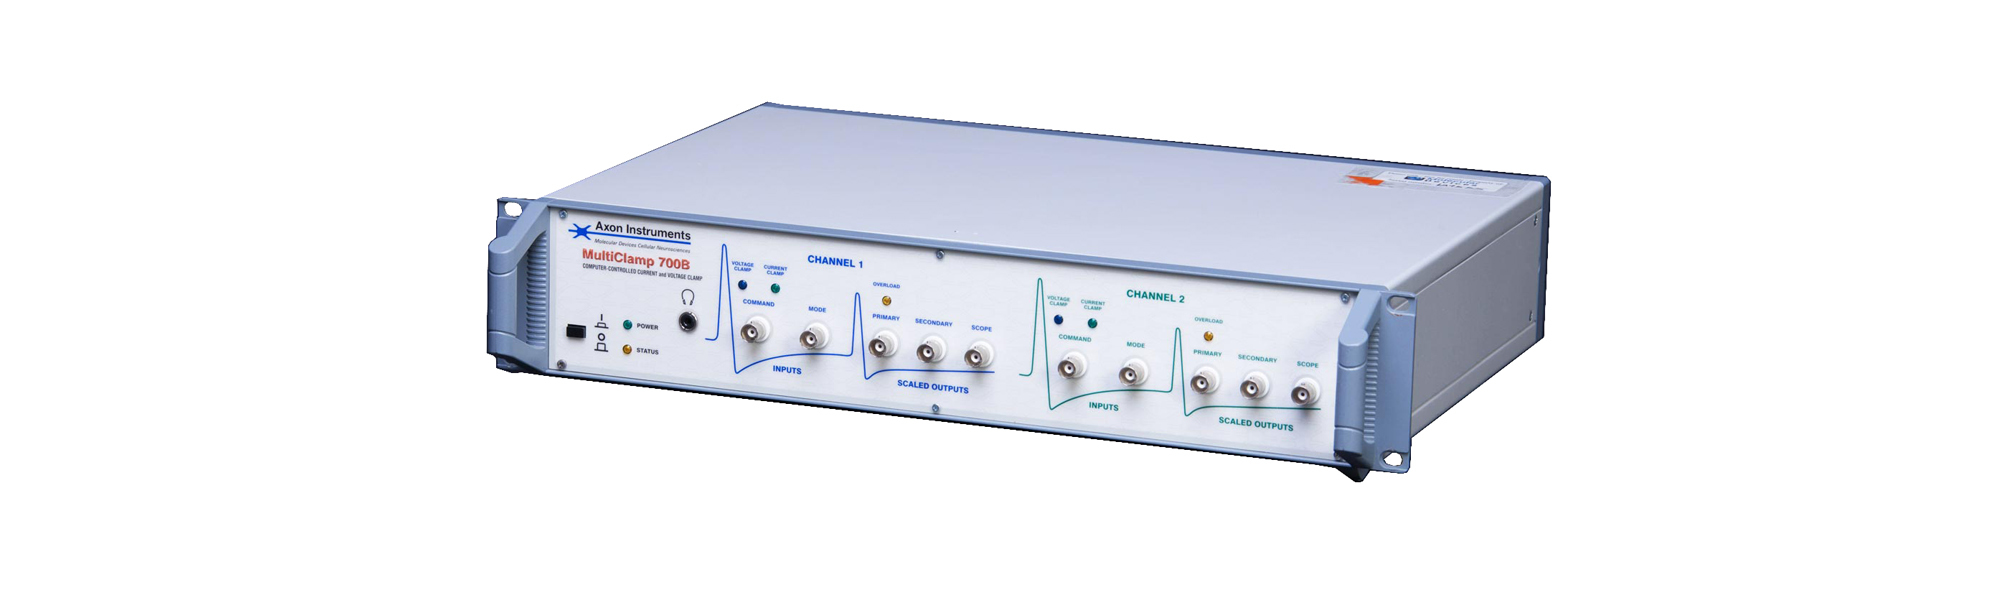 Molecular Devices MultiClamp 700B Amplifier